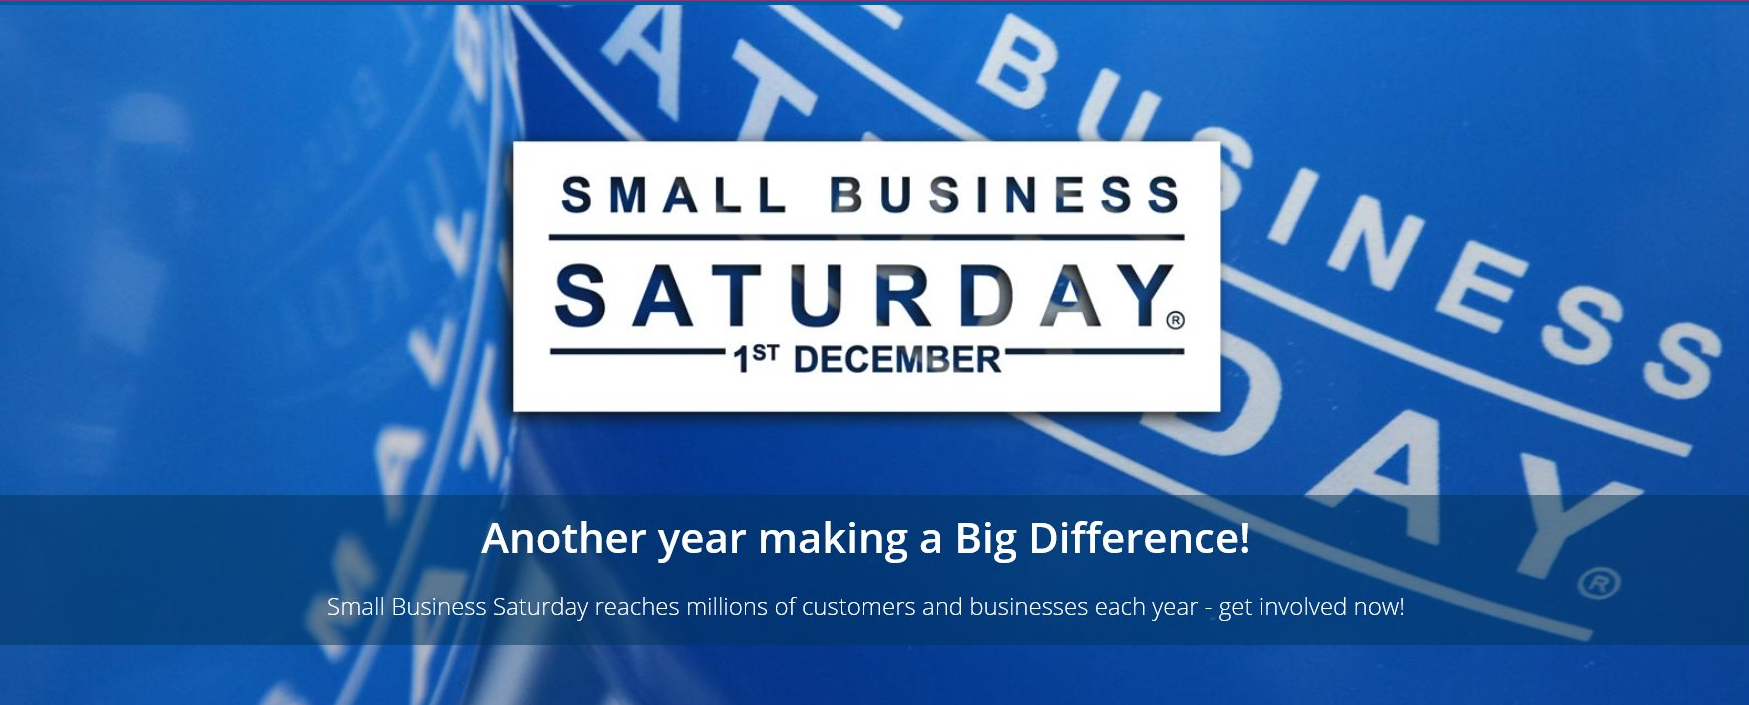 Championing Small Businesses across Aldridge-Brownhills